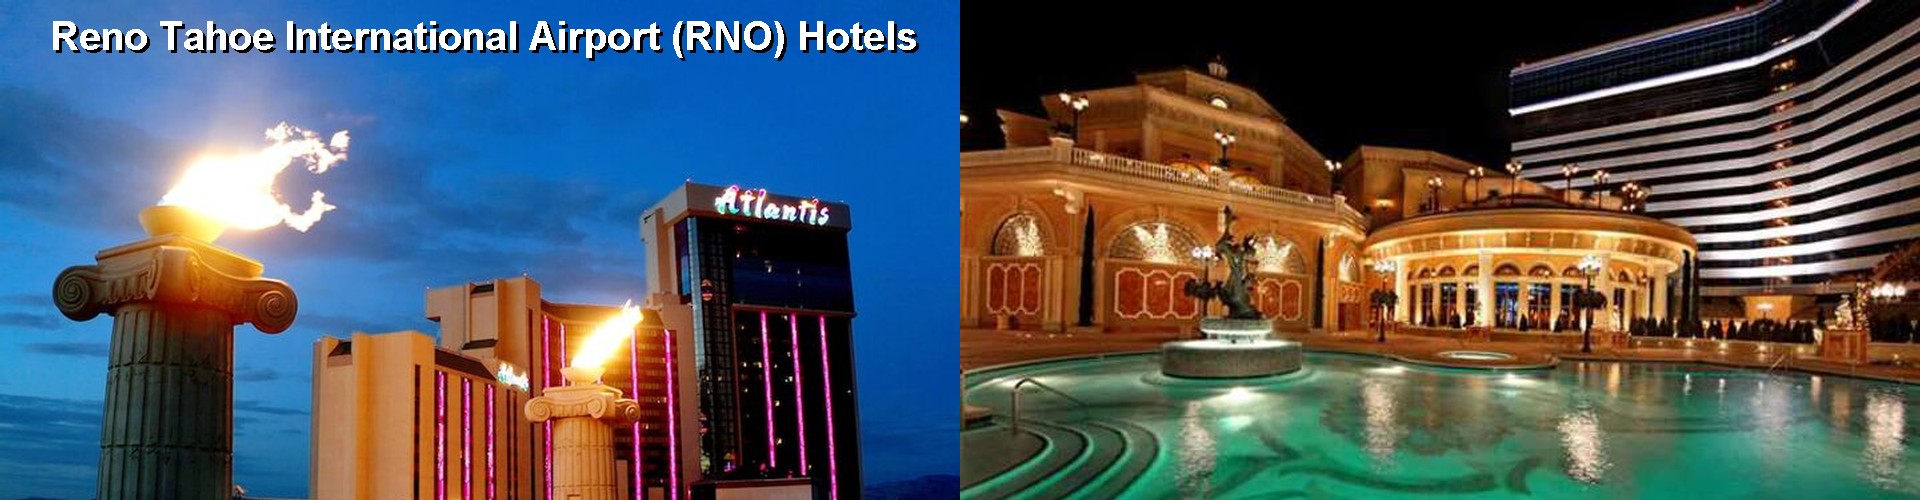 4 Best Hotels near Reno Tahoe International Airport (RNO)